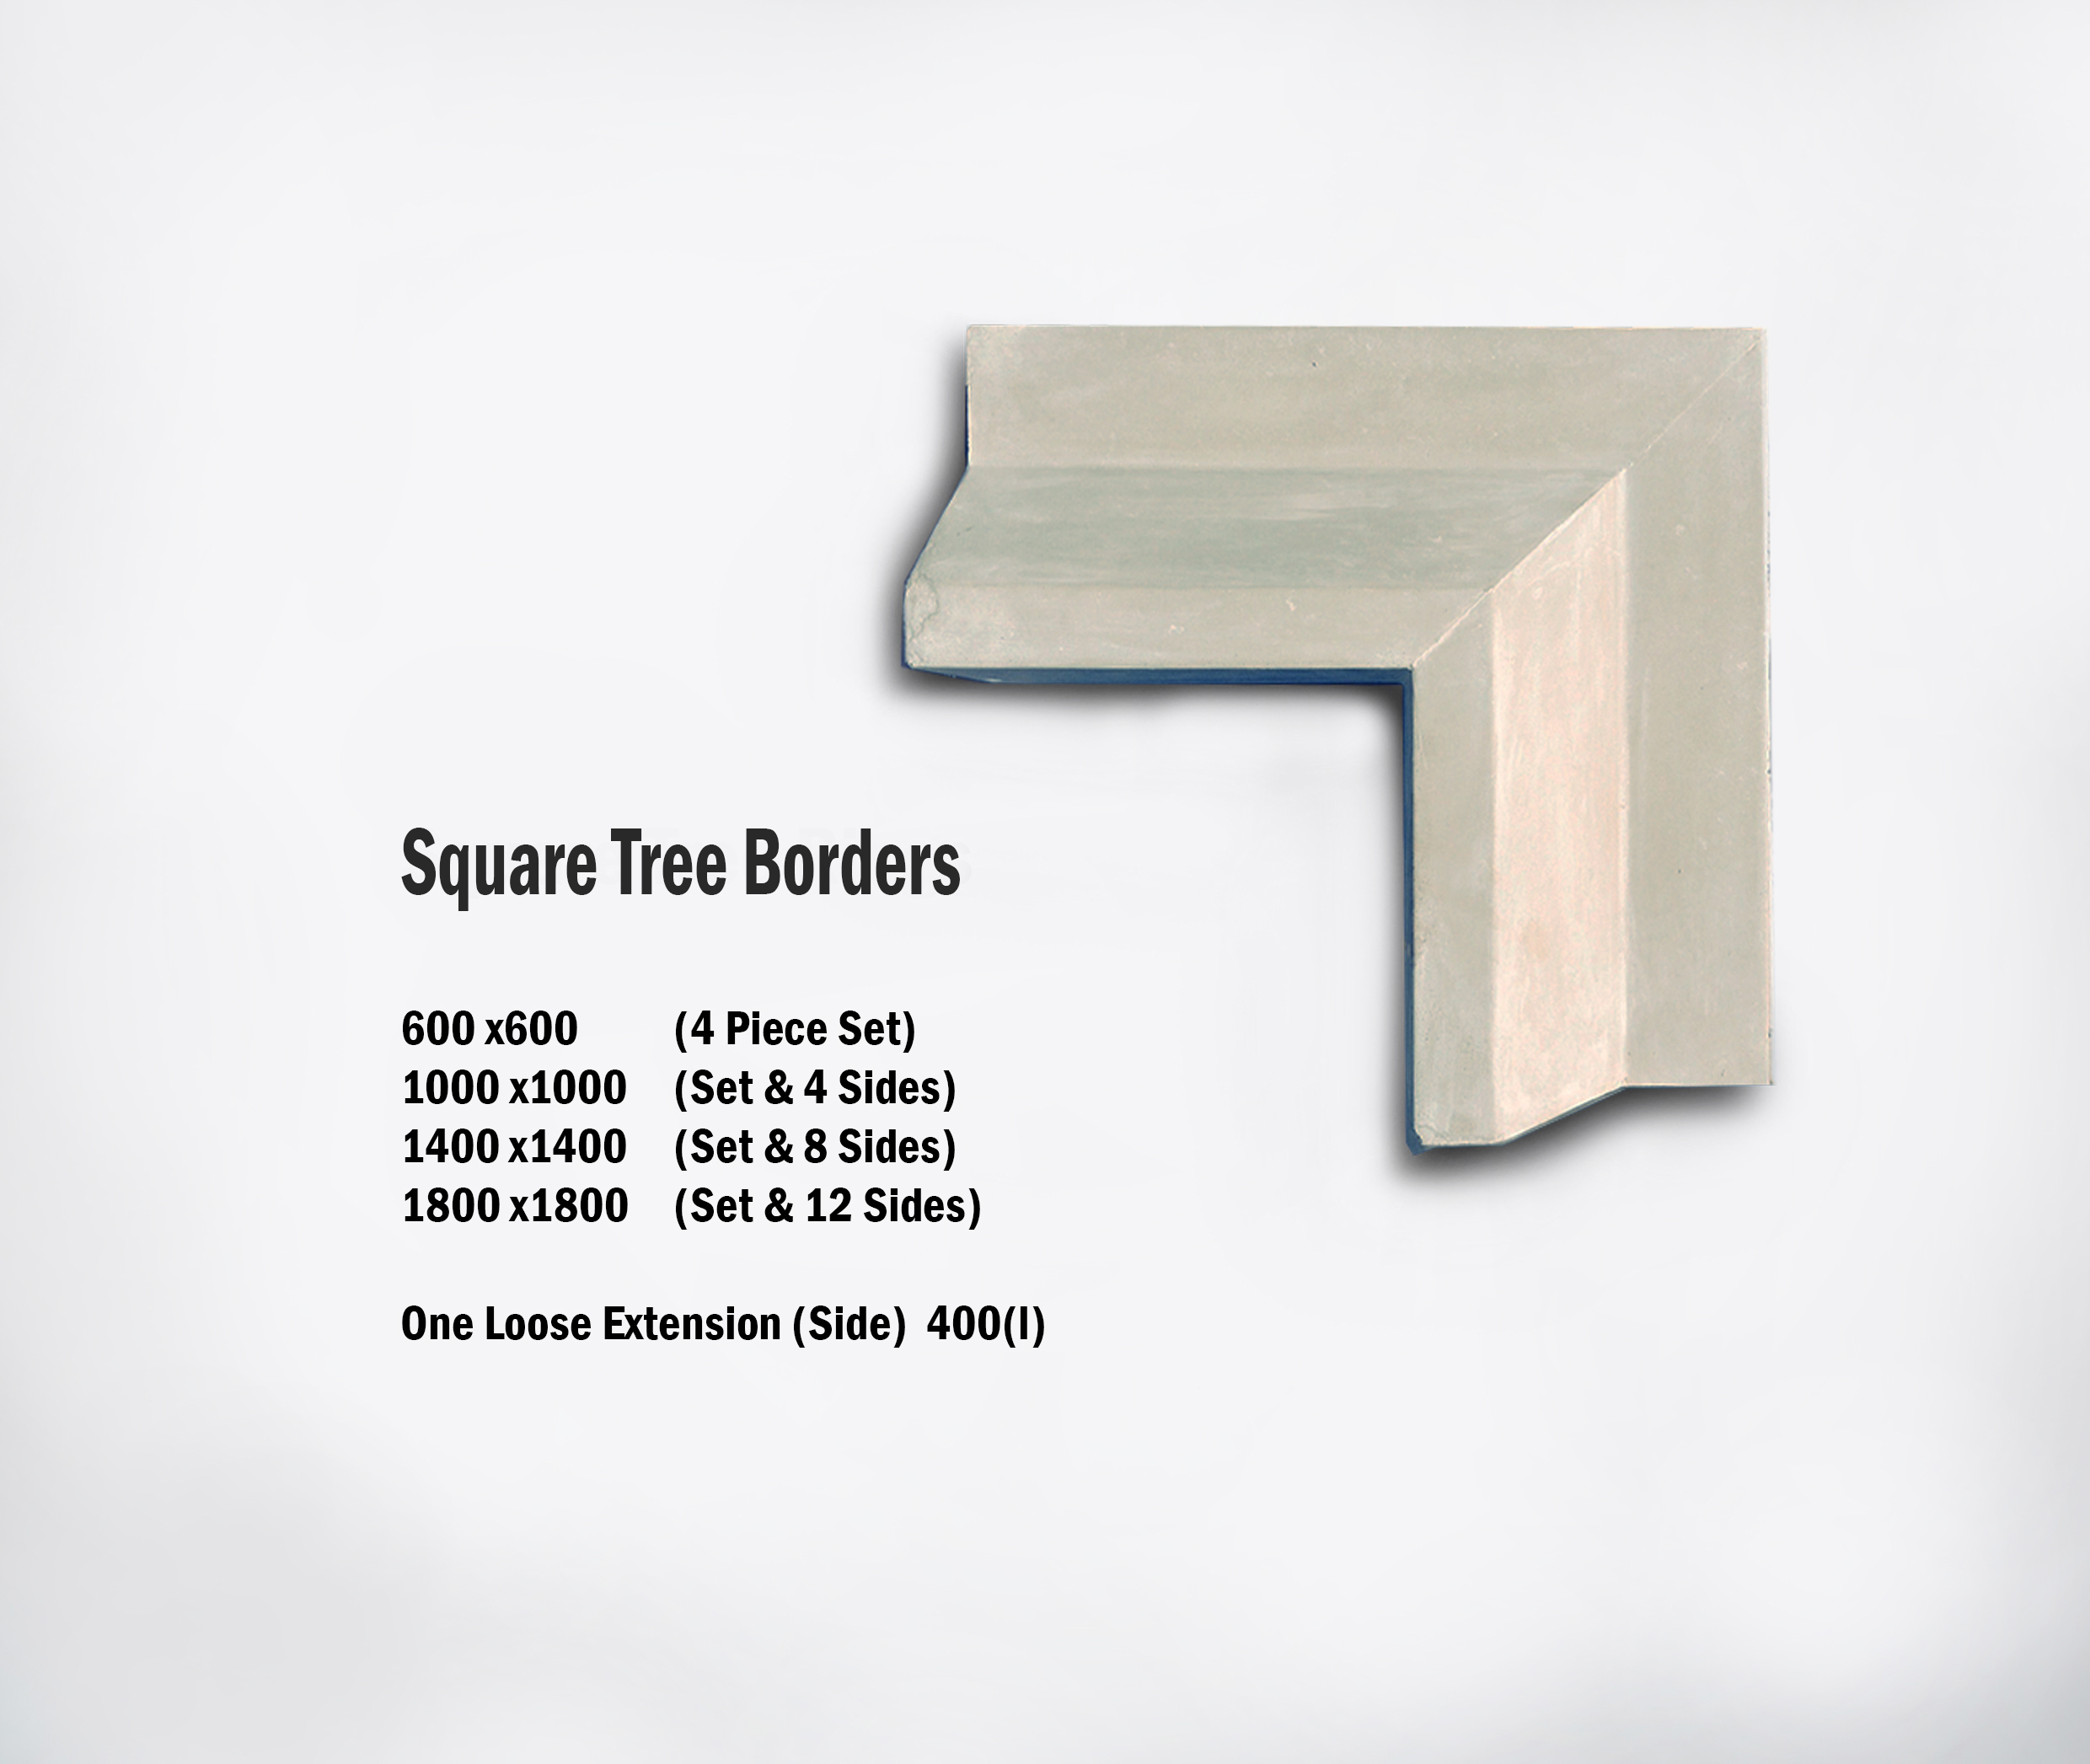 Square Tree Borders